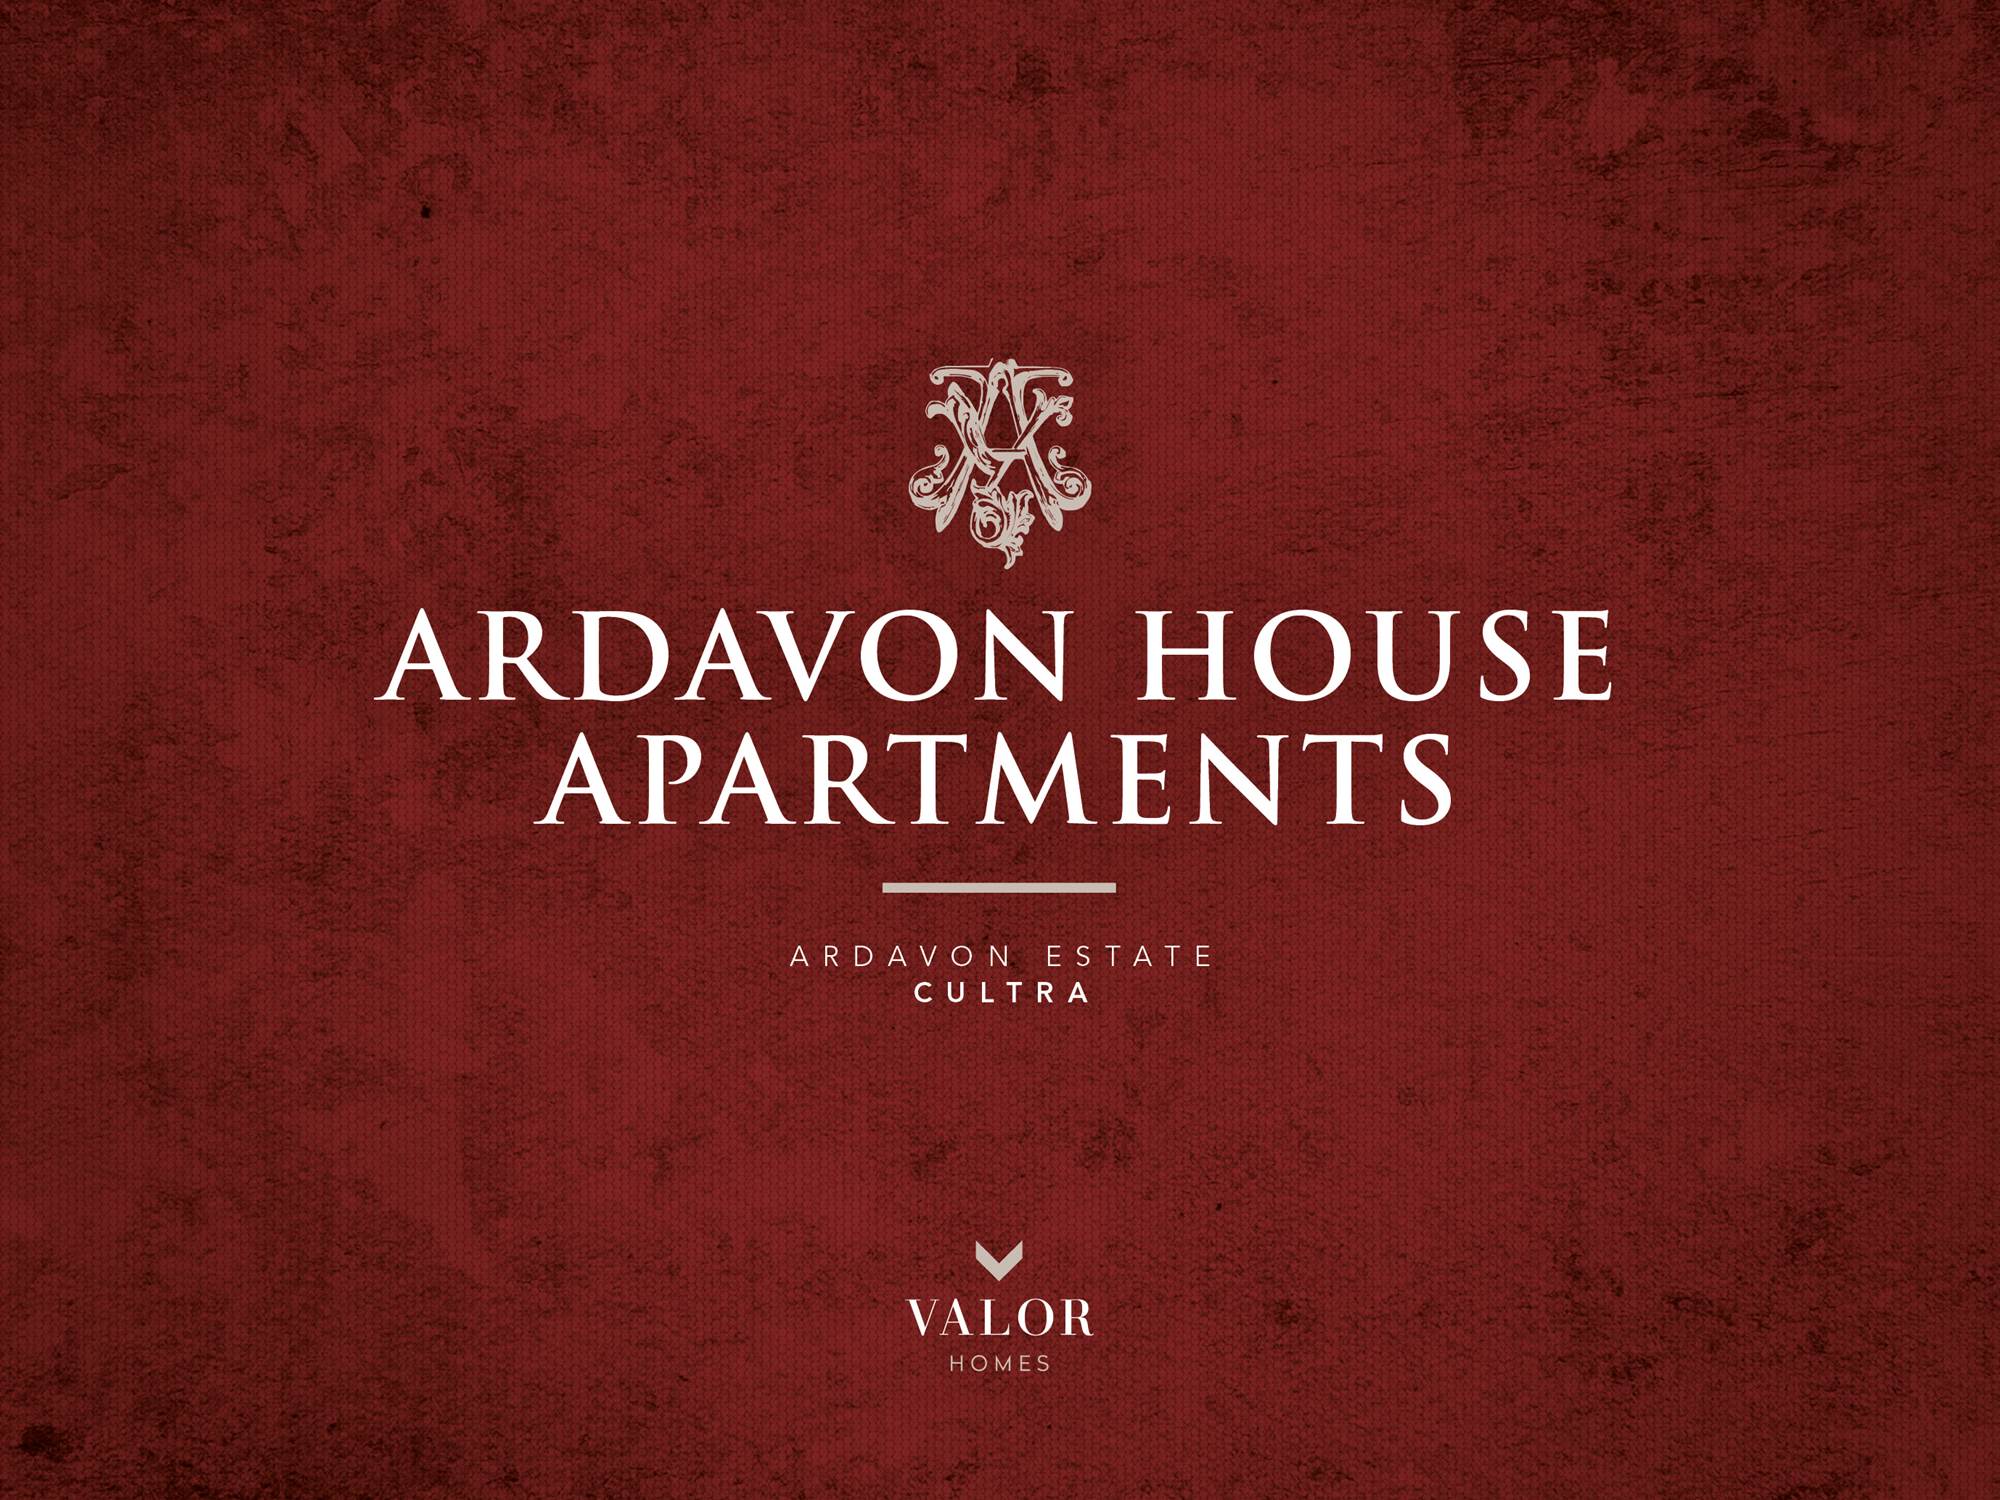 Ardavon House Apartments, Ardavon Estate, Cultra